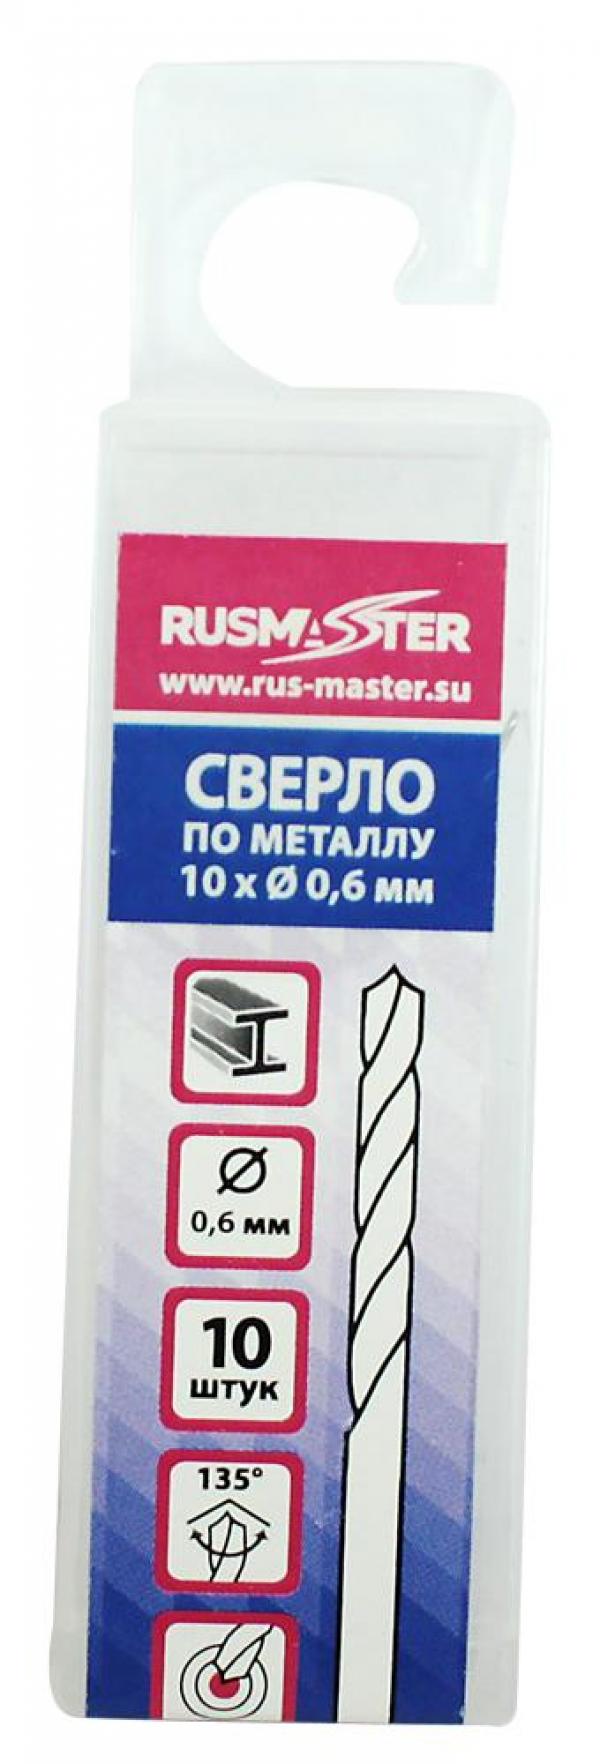 Сверло по металлу 3,5 мм MASTER (10) купить онлайн за 13 руб. в интернет-магазине ТД ОЛИС